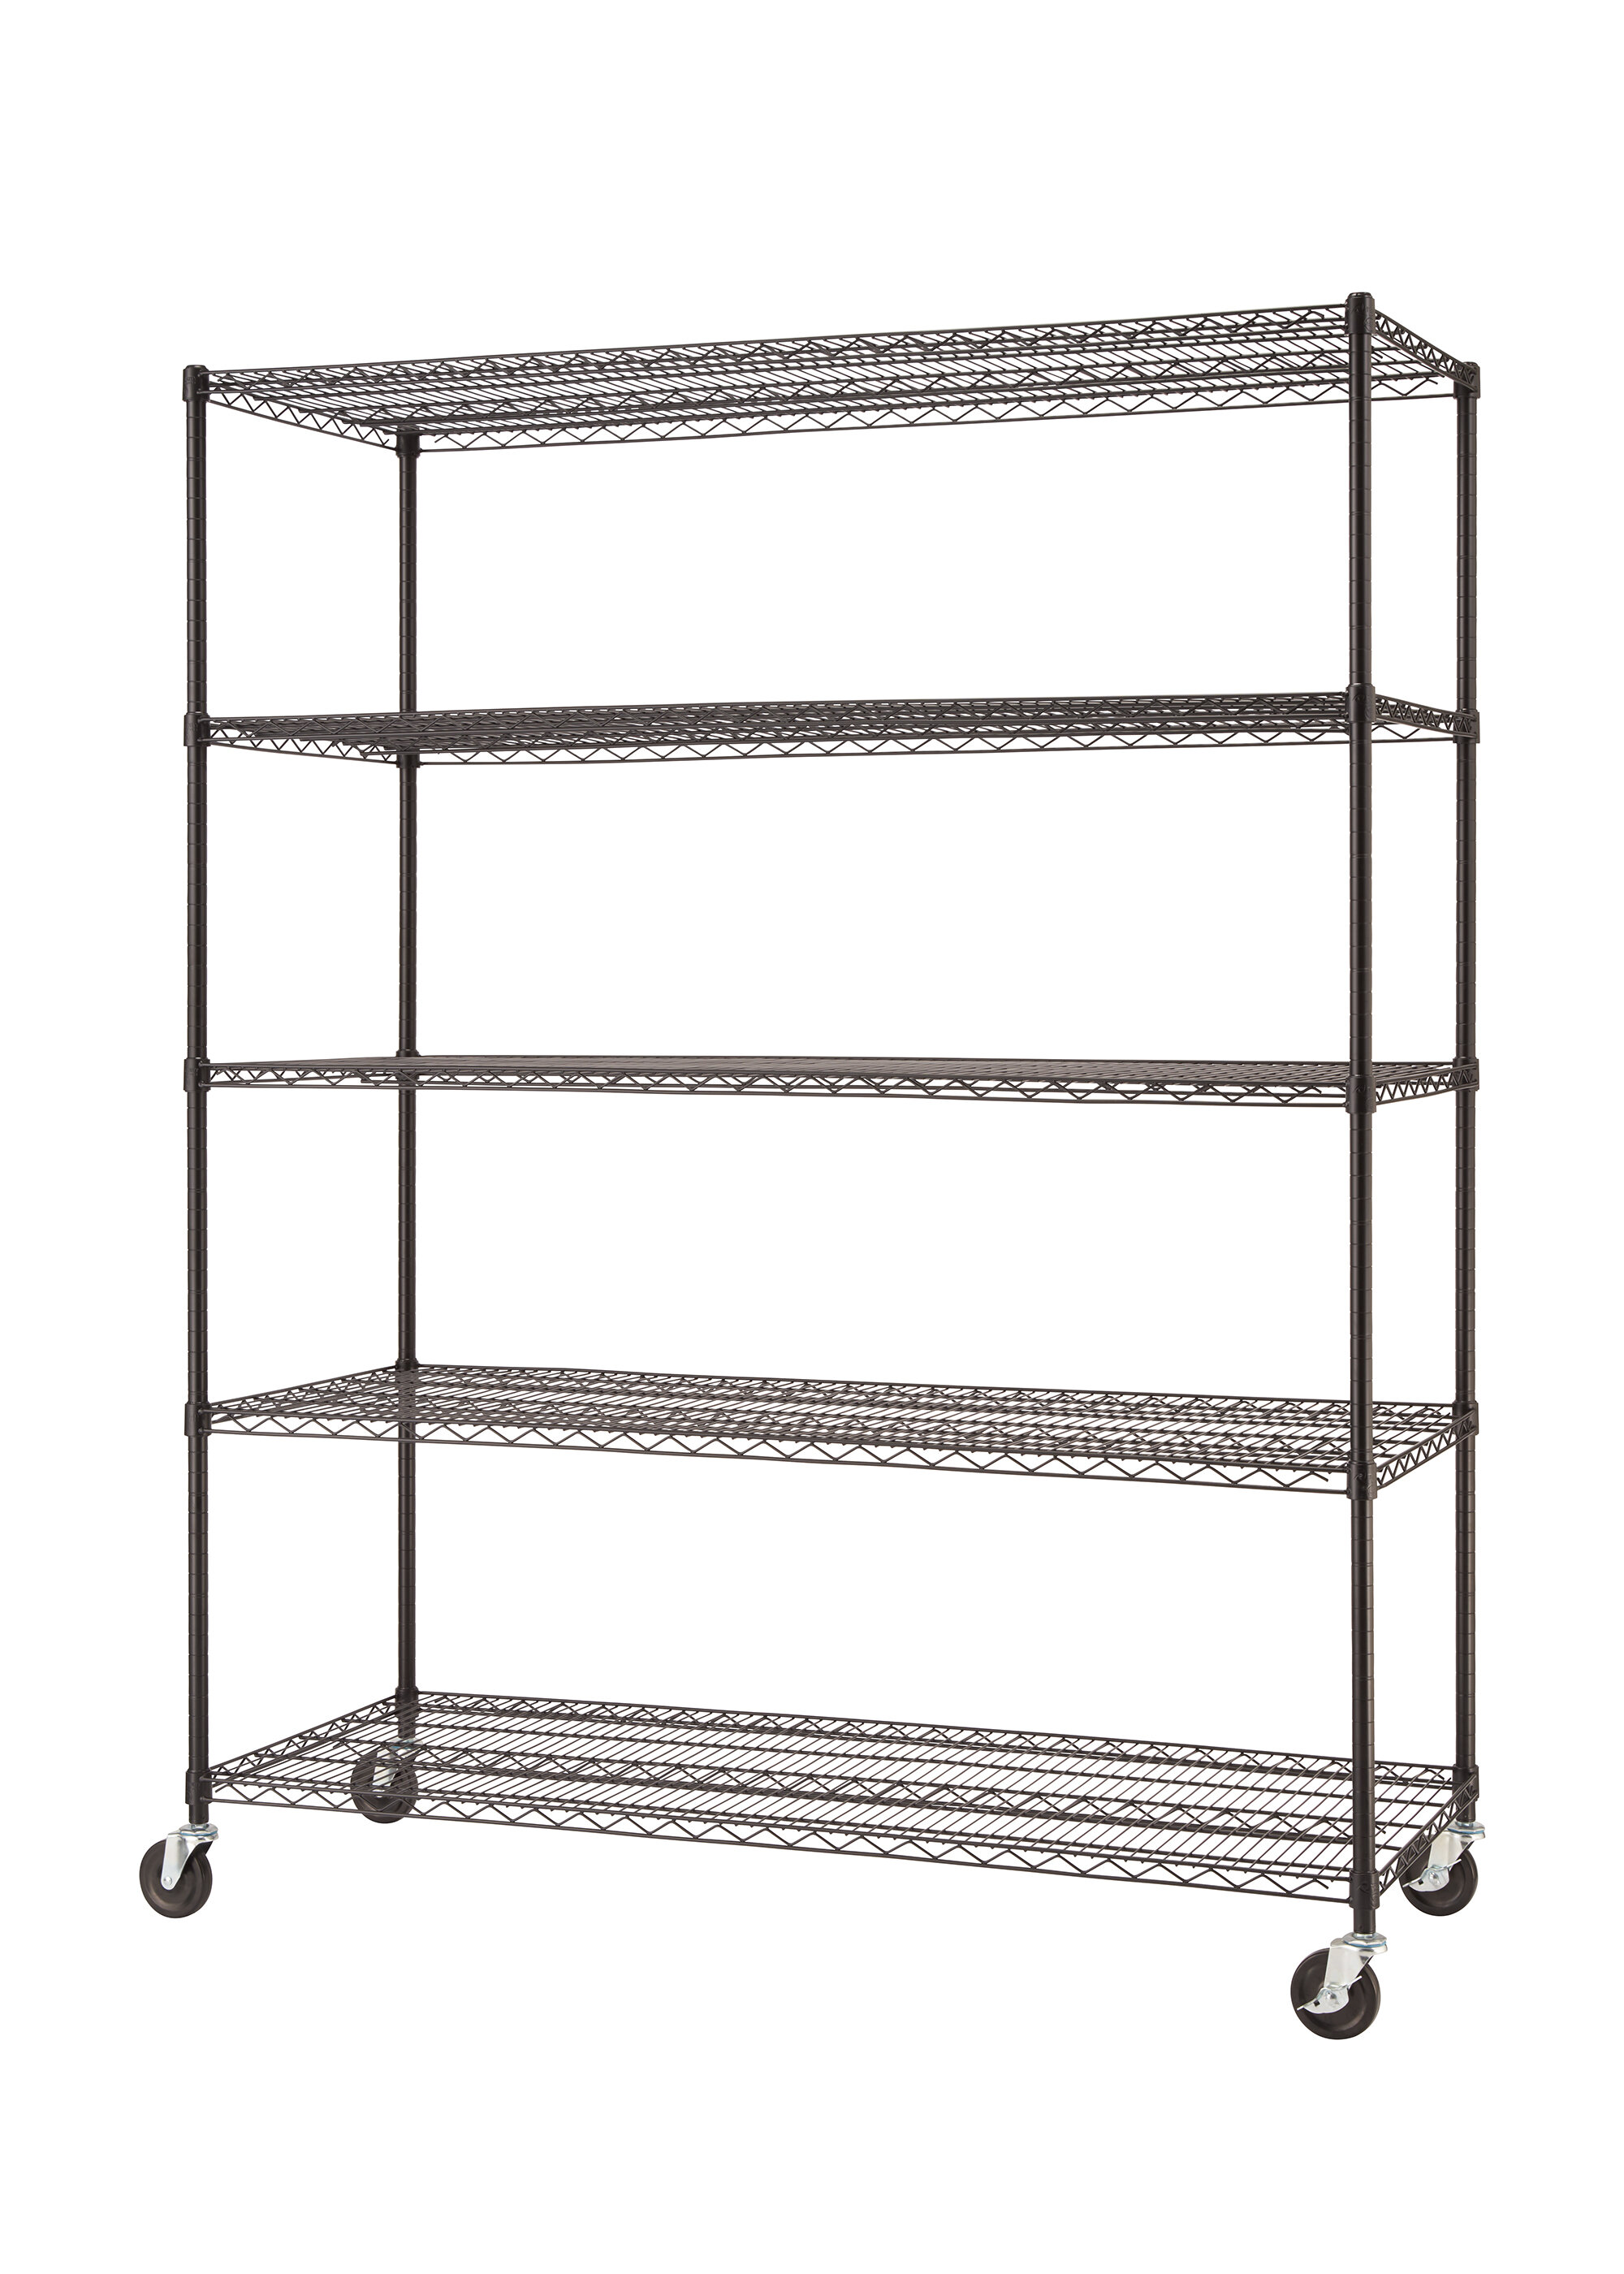 Perfect for Home Commercial inch. inch. inch. Cabinet Shelf Organizer x 24 NSF Green Epoxy 2-Shelf Kit with 27 Posts Kitchen Storage Garage 14 